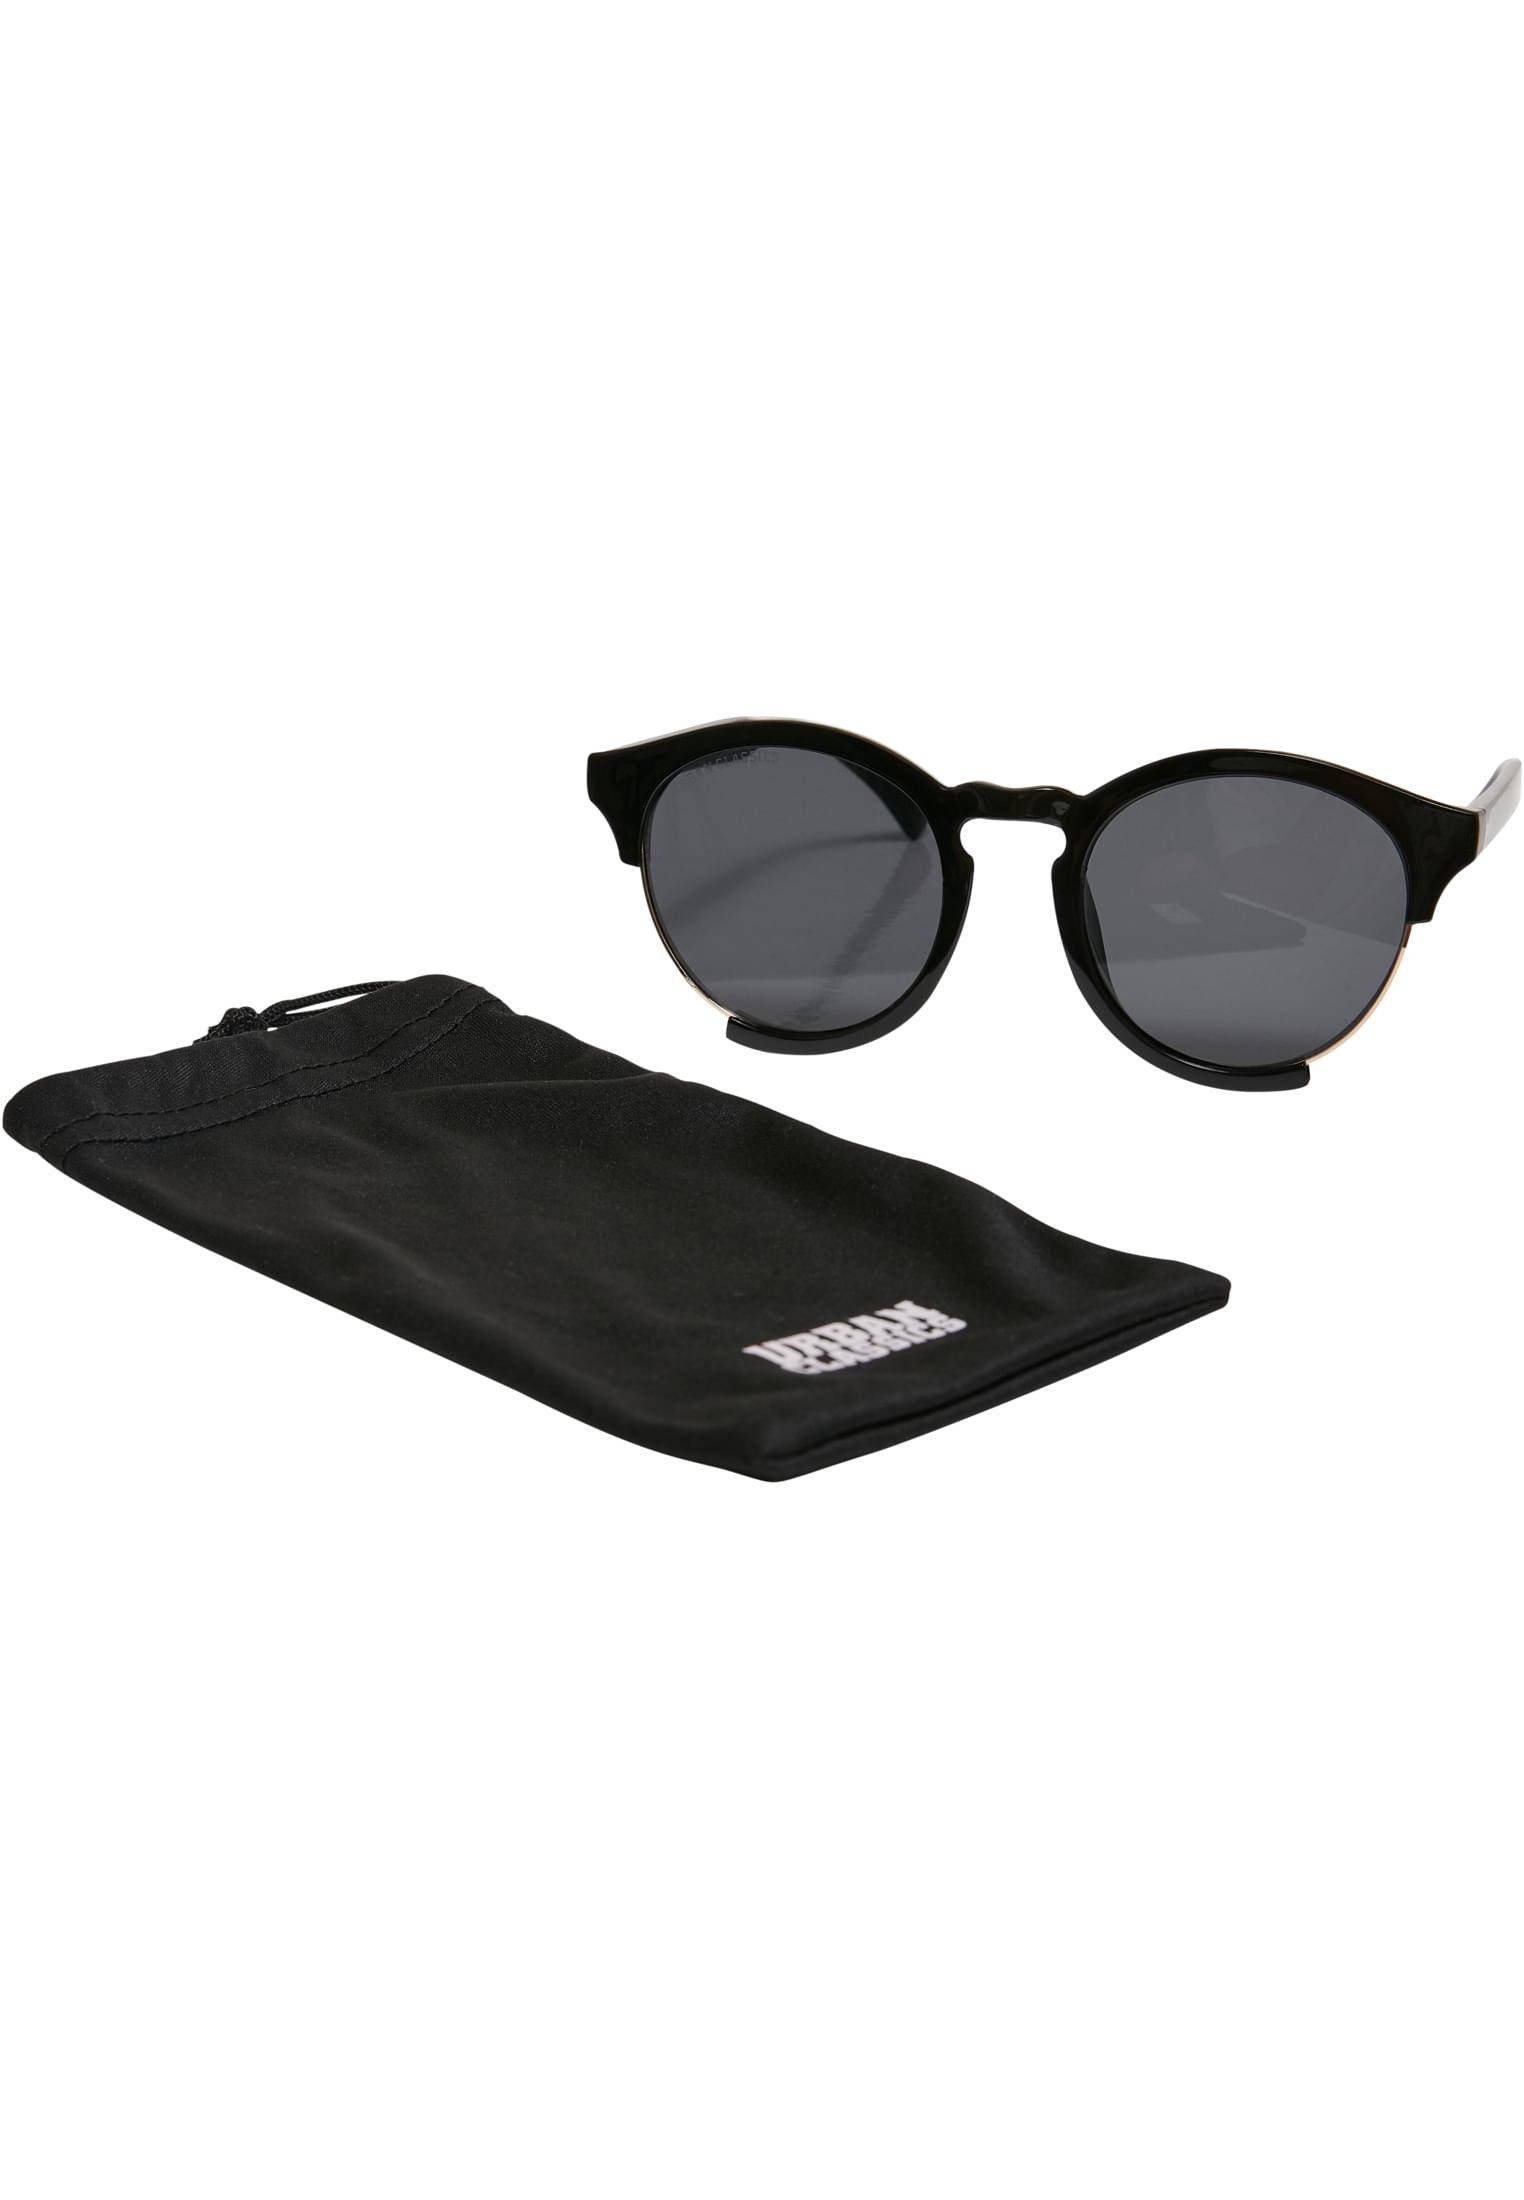 URBAN CLASSICS Sonnenbrille Unisex Sunglasses Coral Bay black